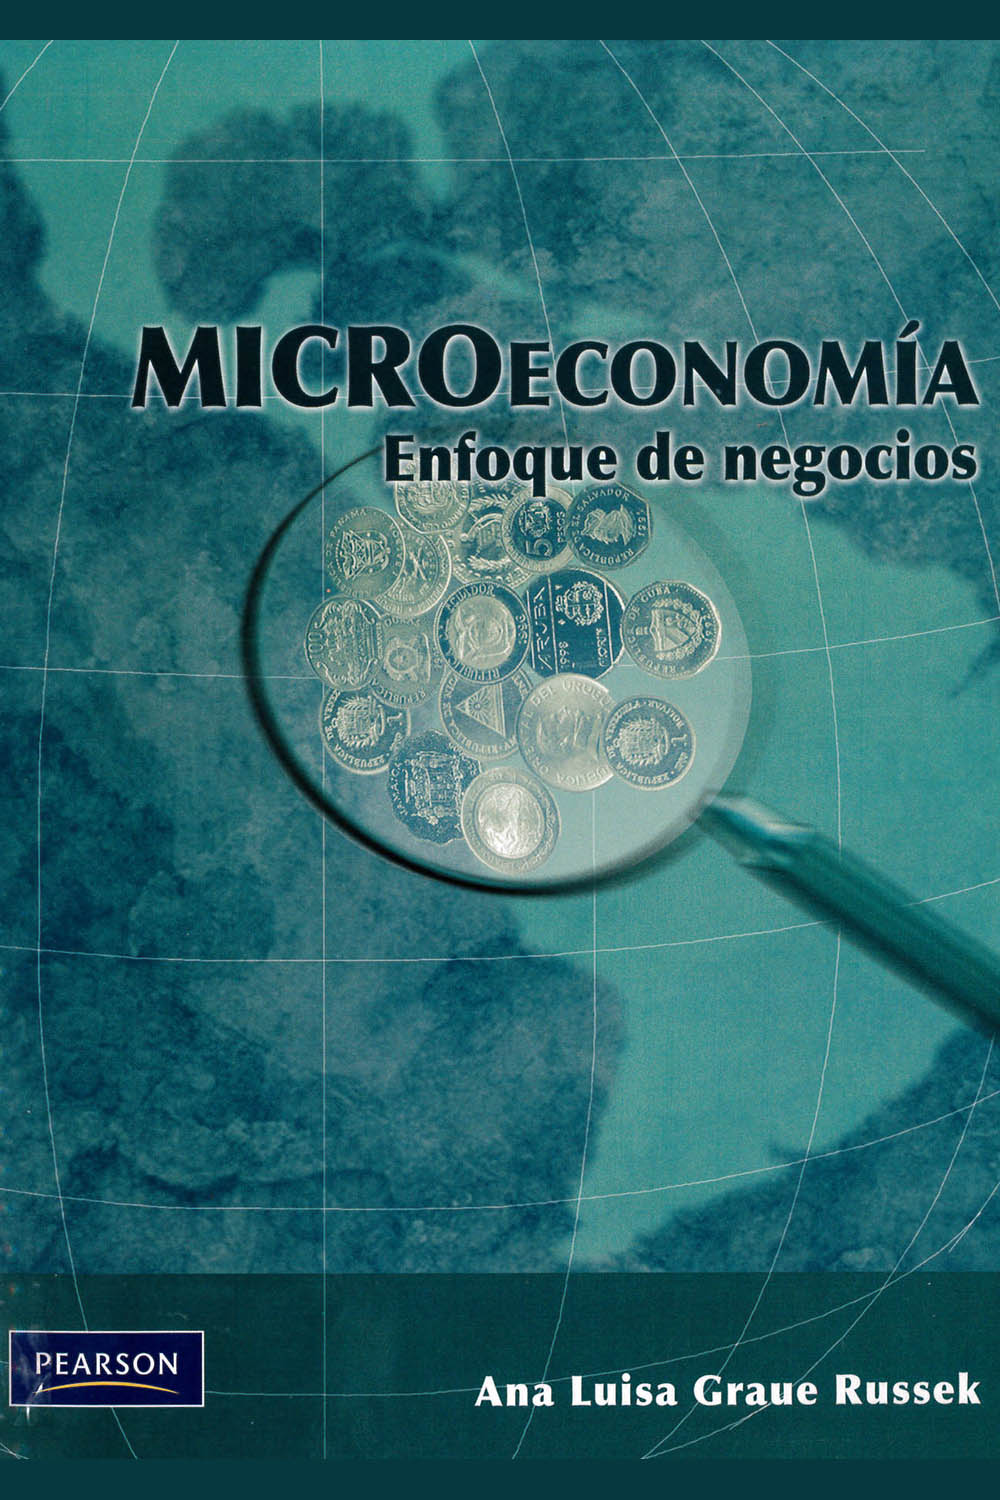 11 / 16 - HB173 G73 Microeconomía
Ana Luisa Graue Russek - Pearson, México 2006